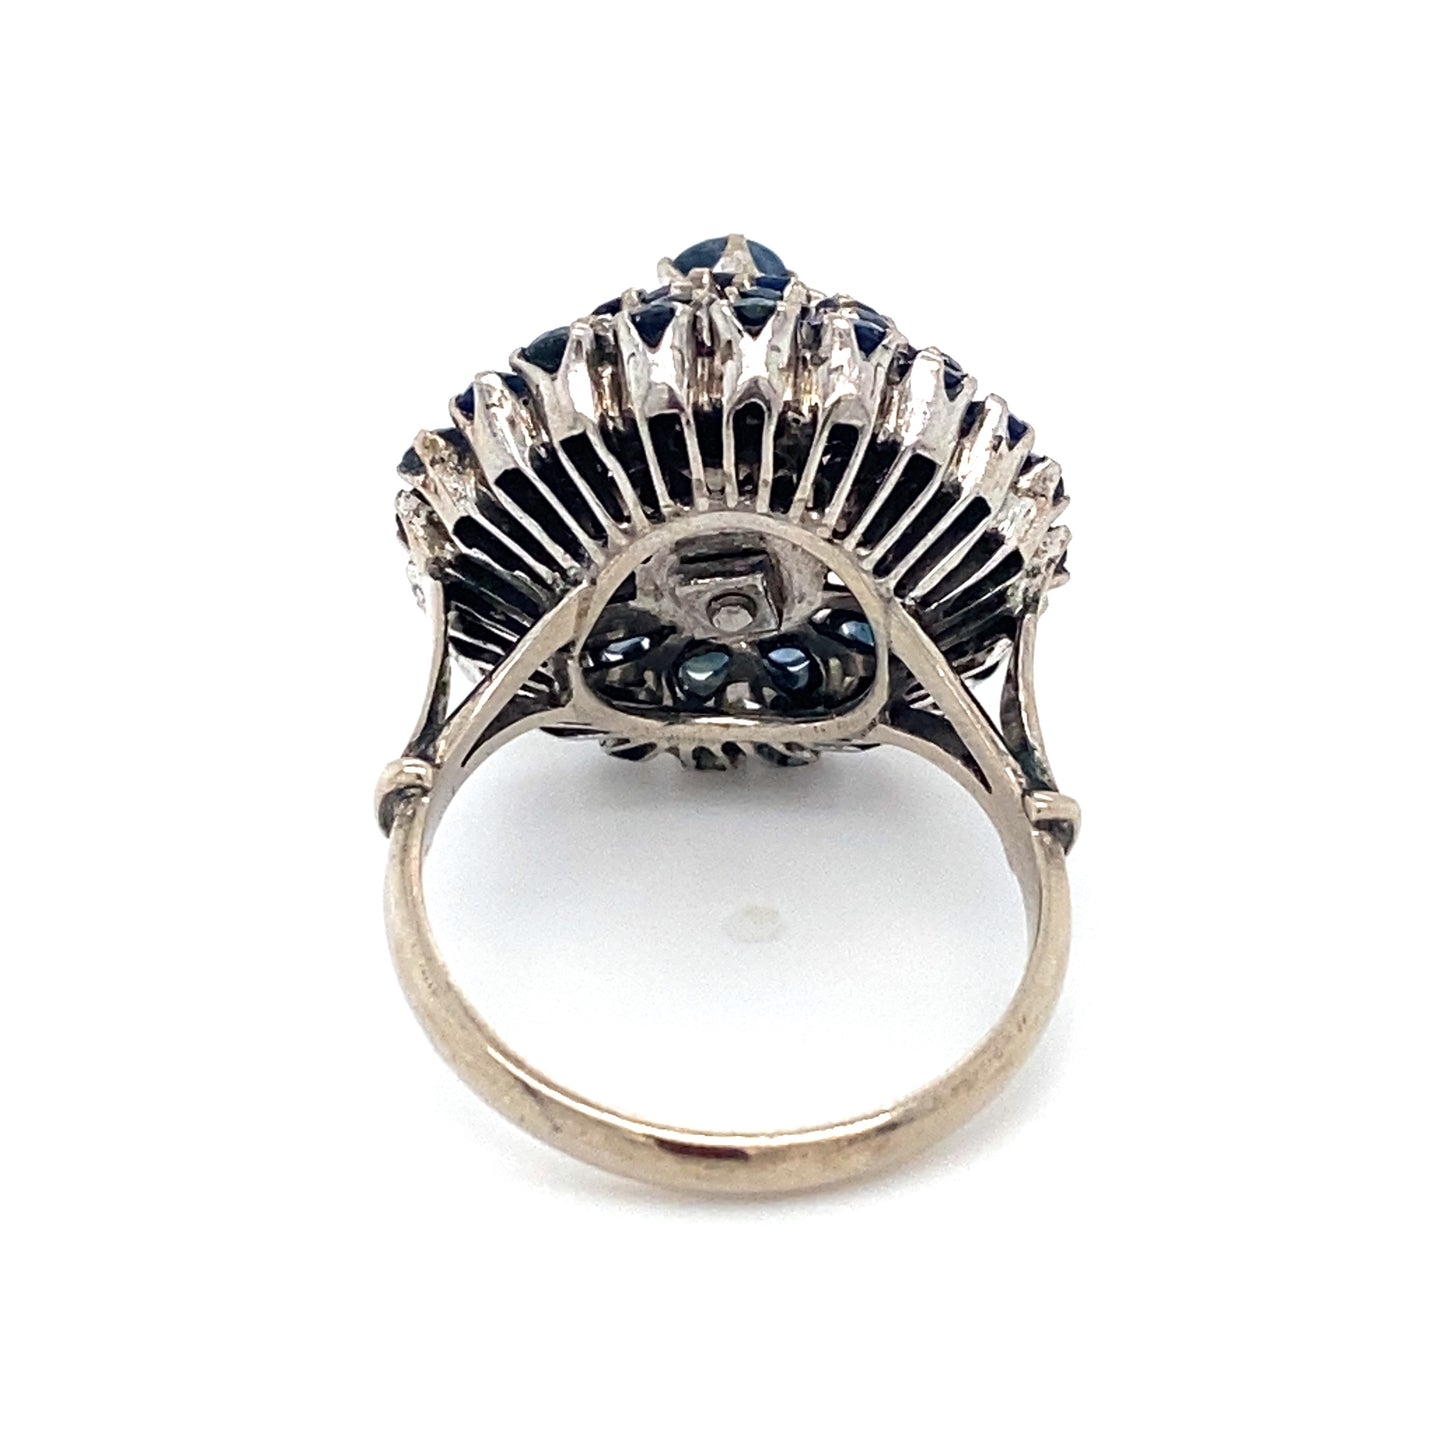 Circa 1950s Sapphire Princess Ring in 14K White Gold